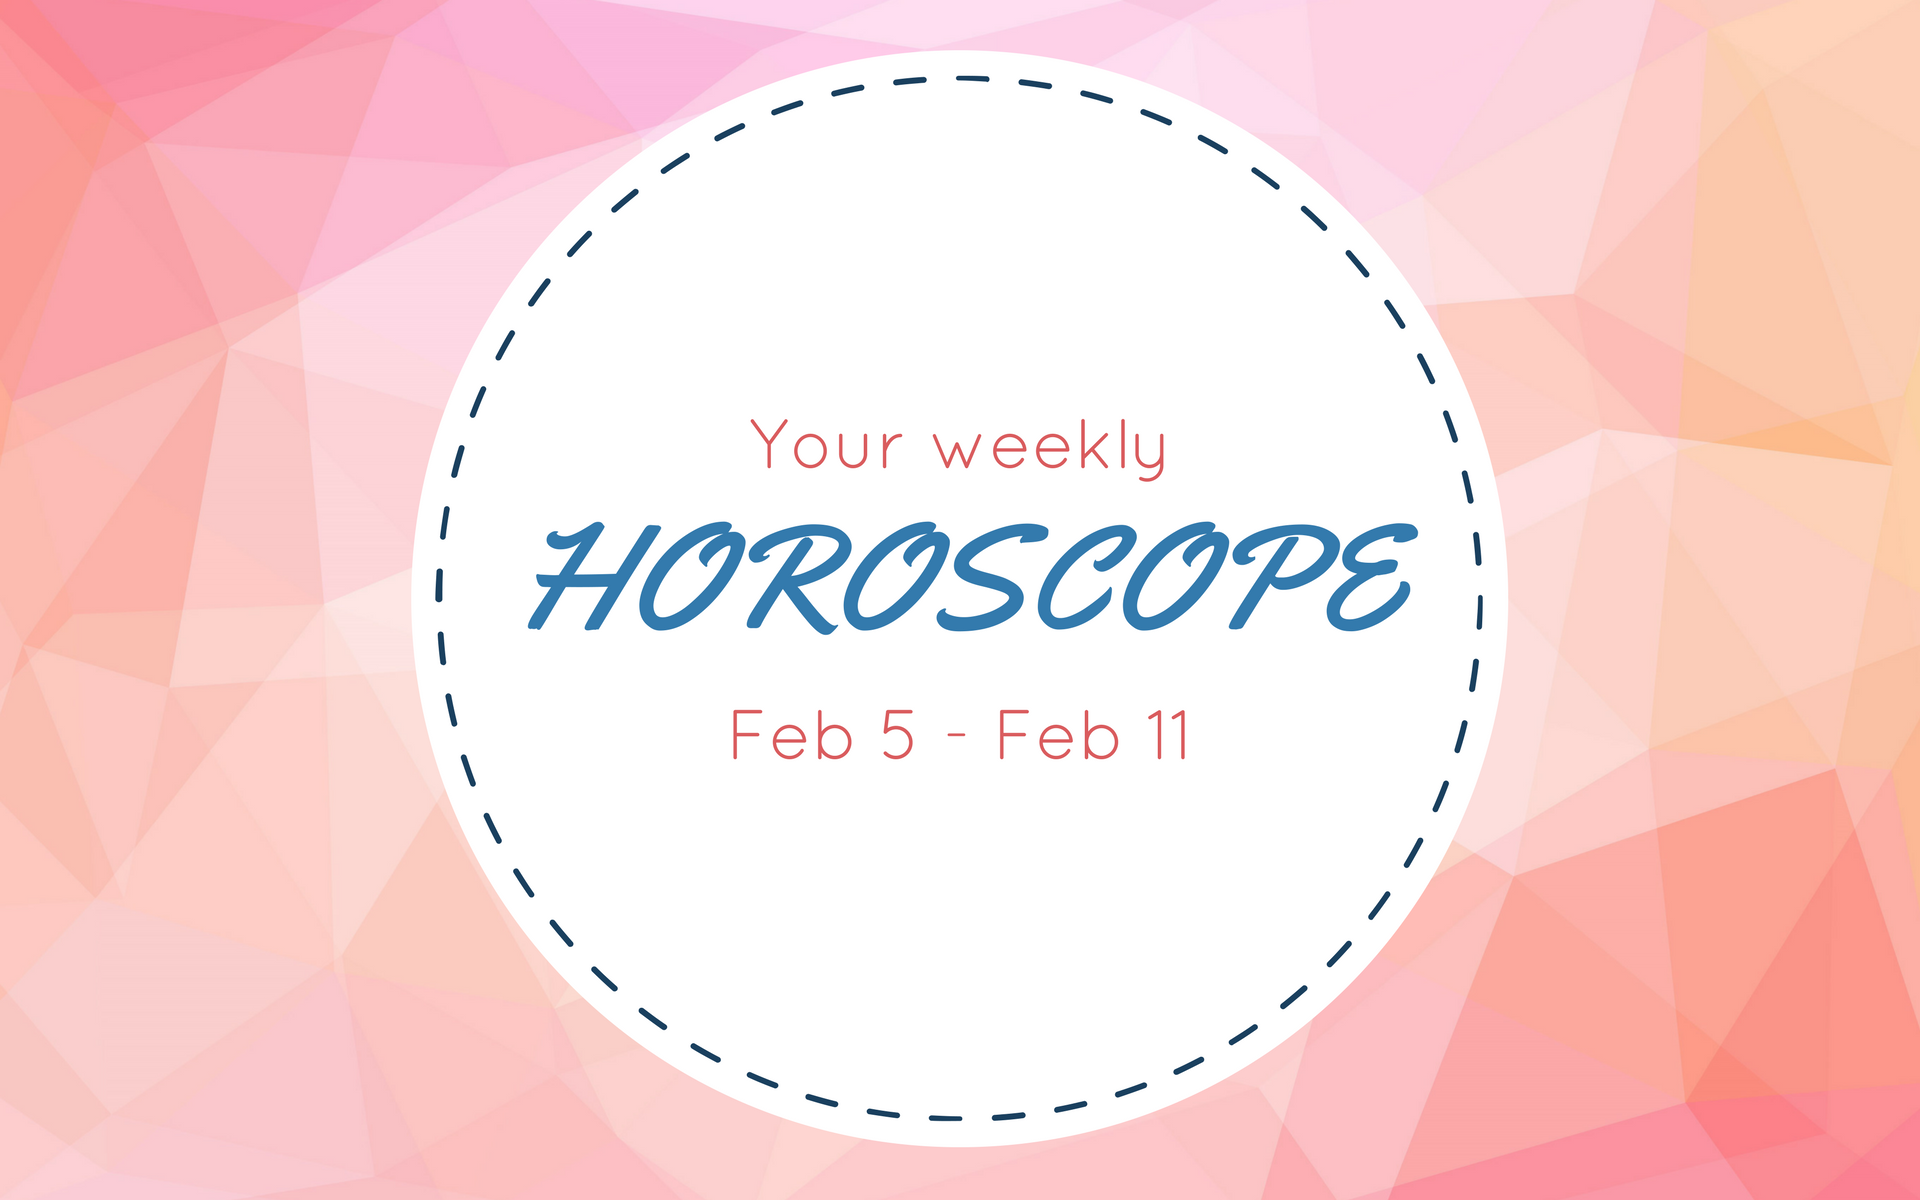 Your Weekly Horoscope: Feb 5 - Feb 11